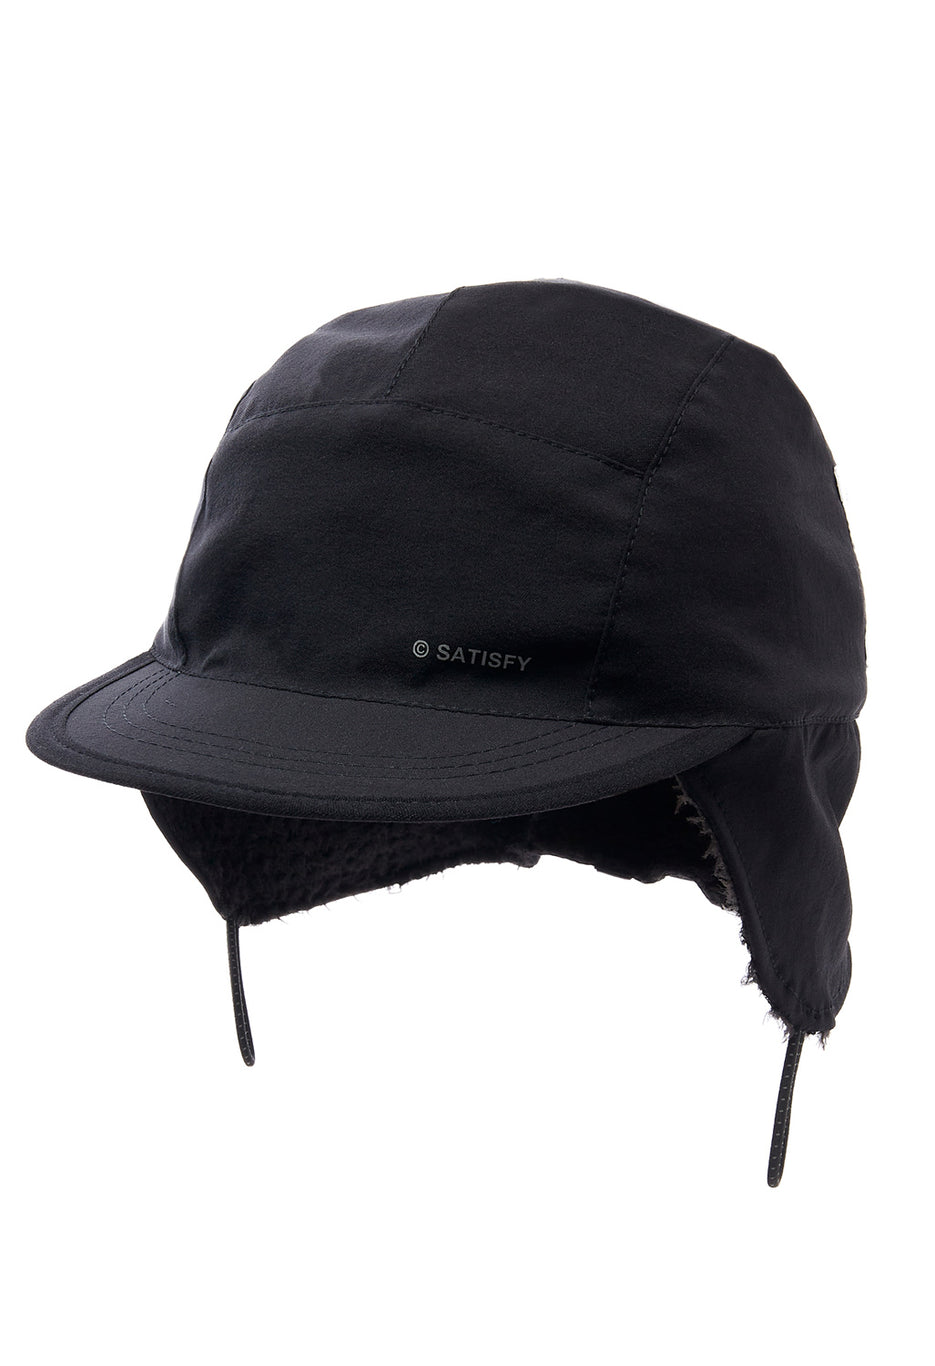 Satisfy Men's PeaceShell Sherpa Hat - Black